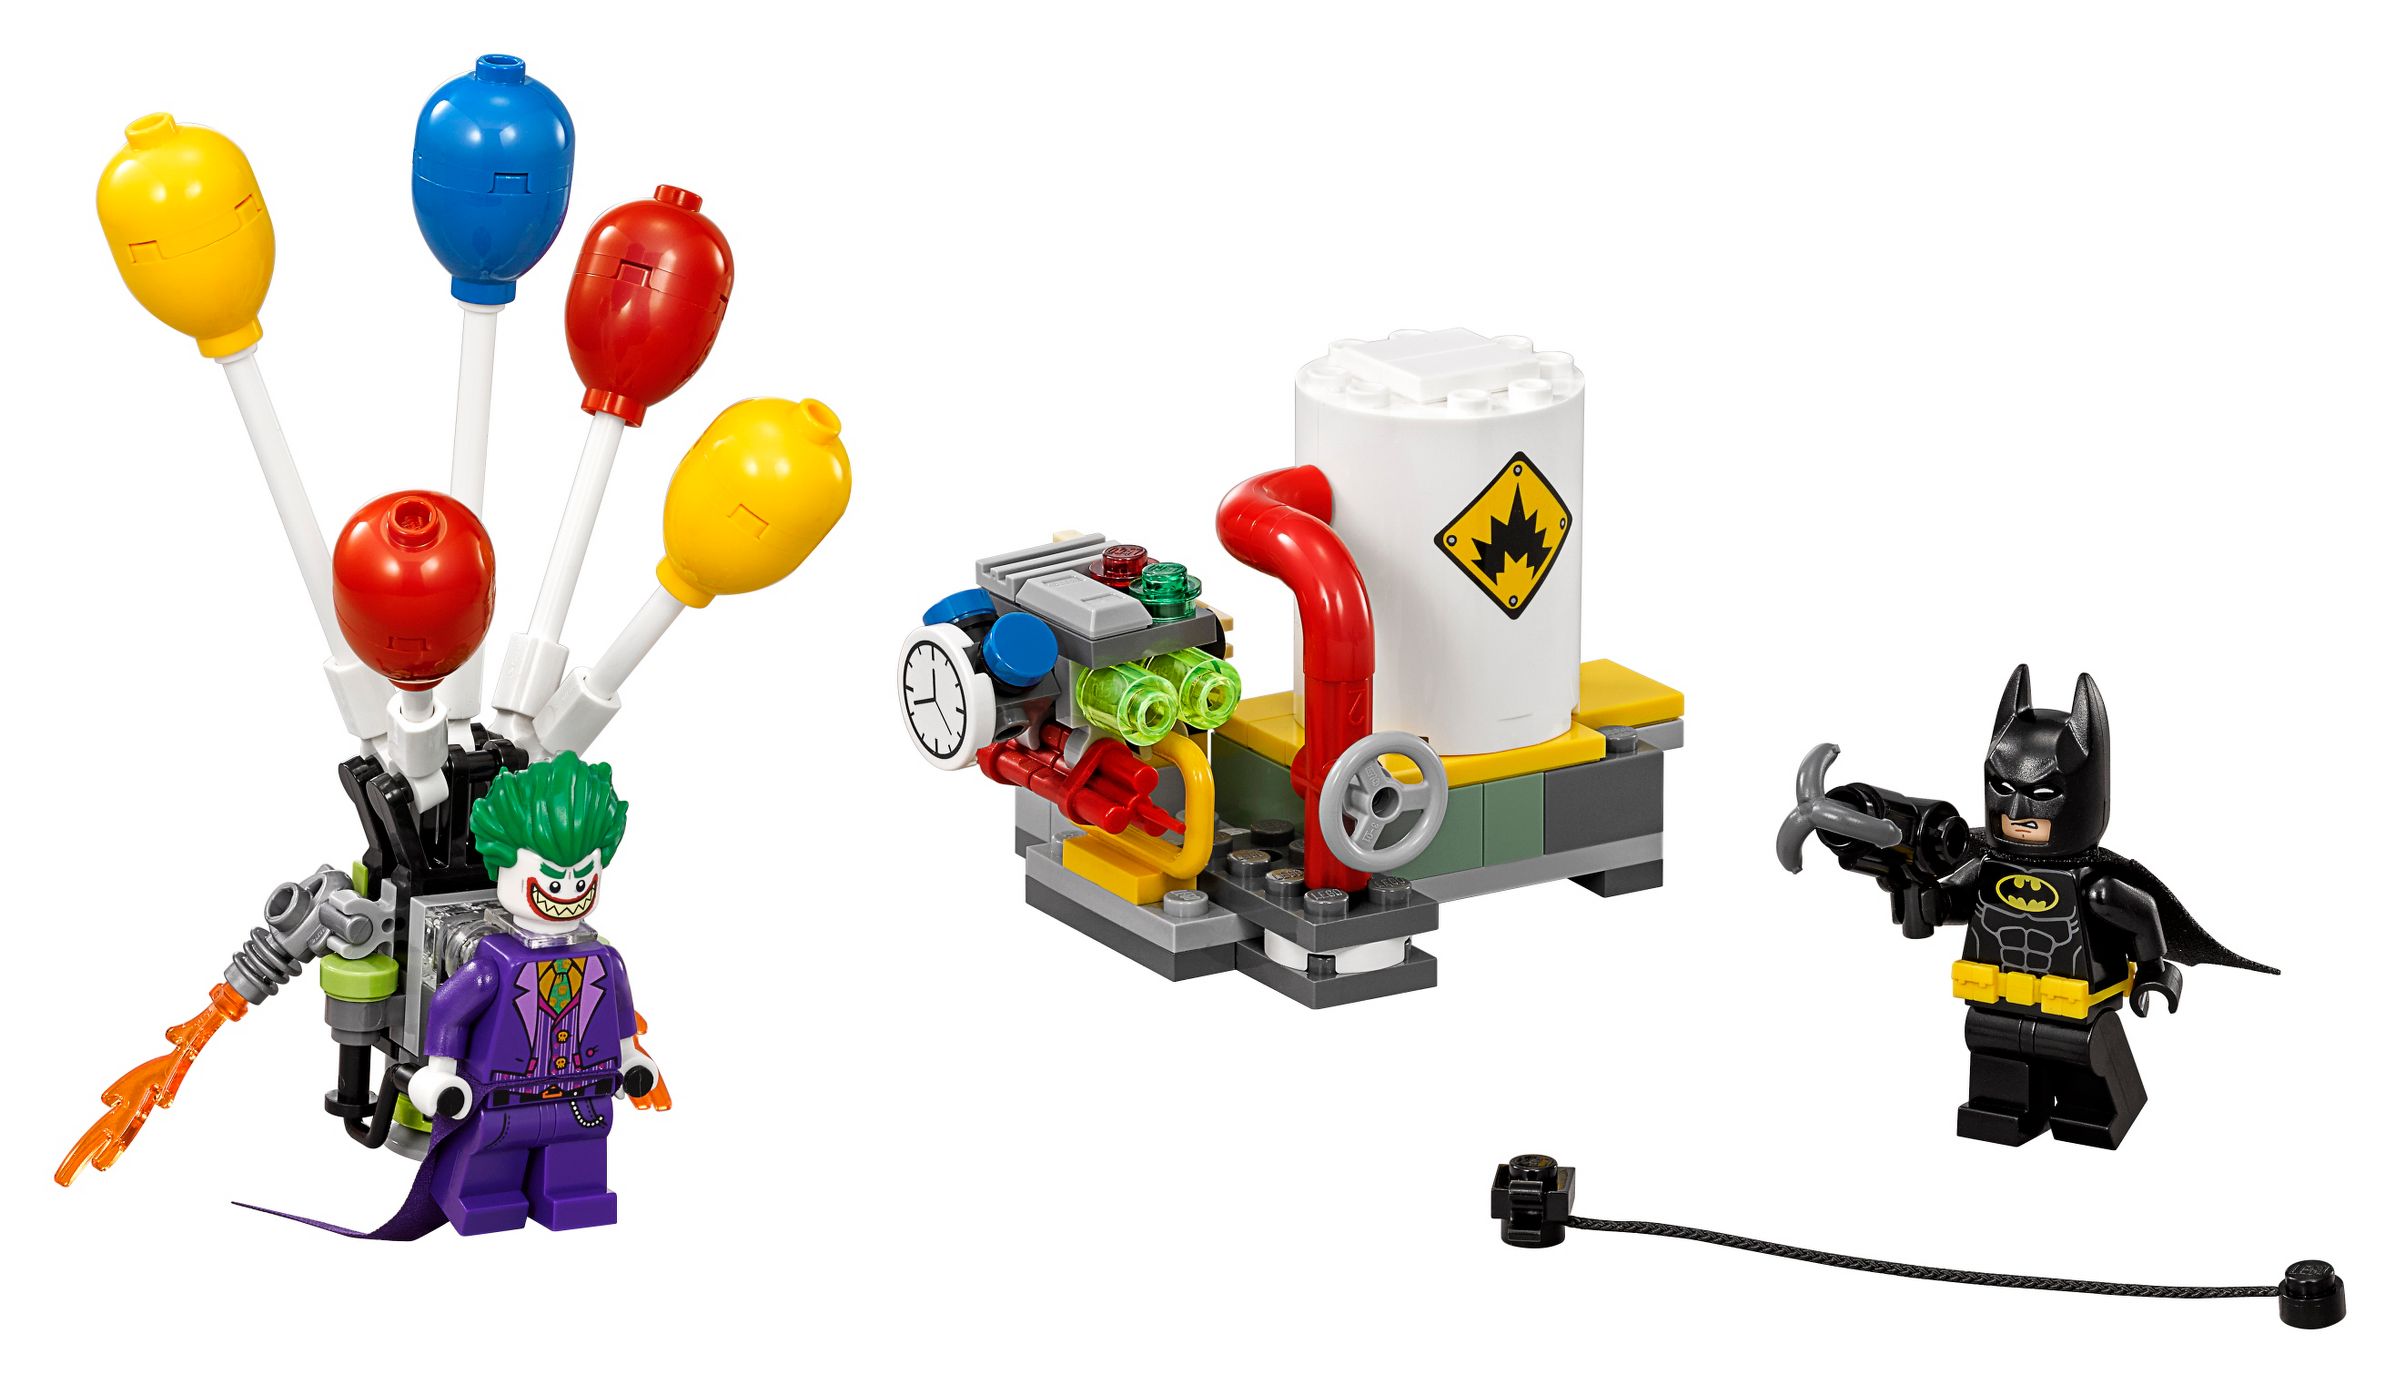 LEGO The LEGO Batman Movie 70900 Jokers Flucht mit den Ballons